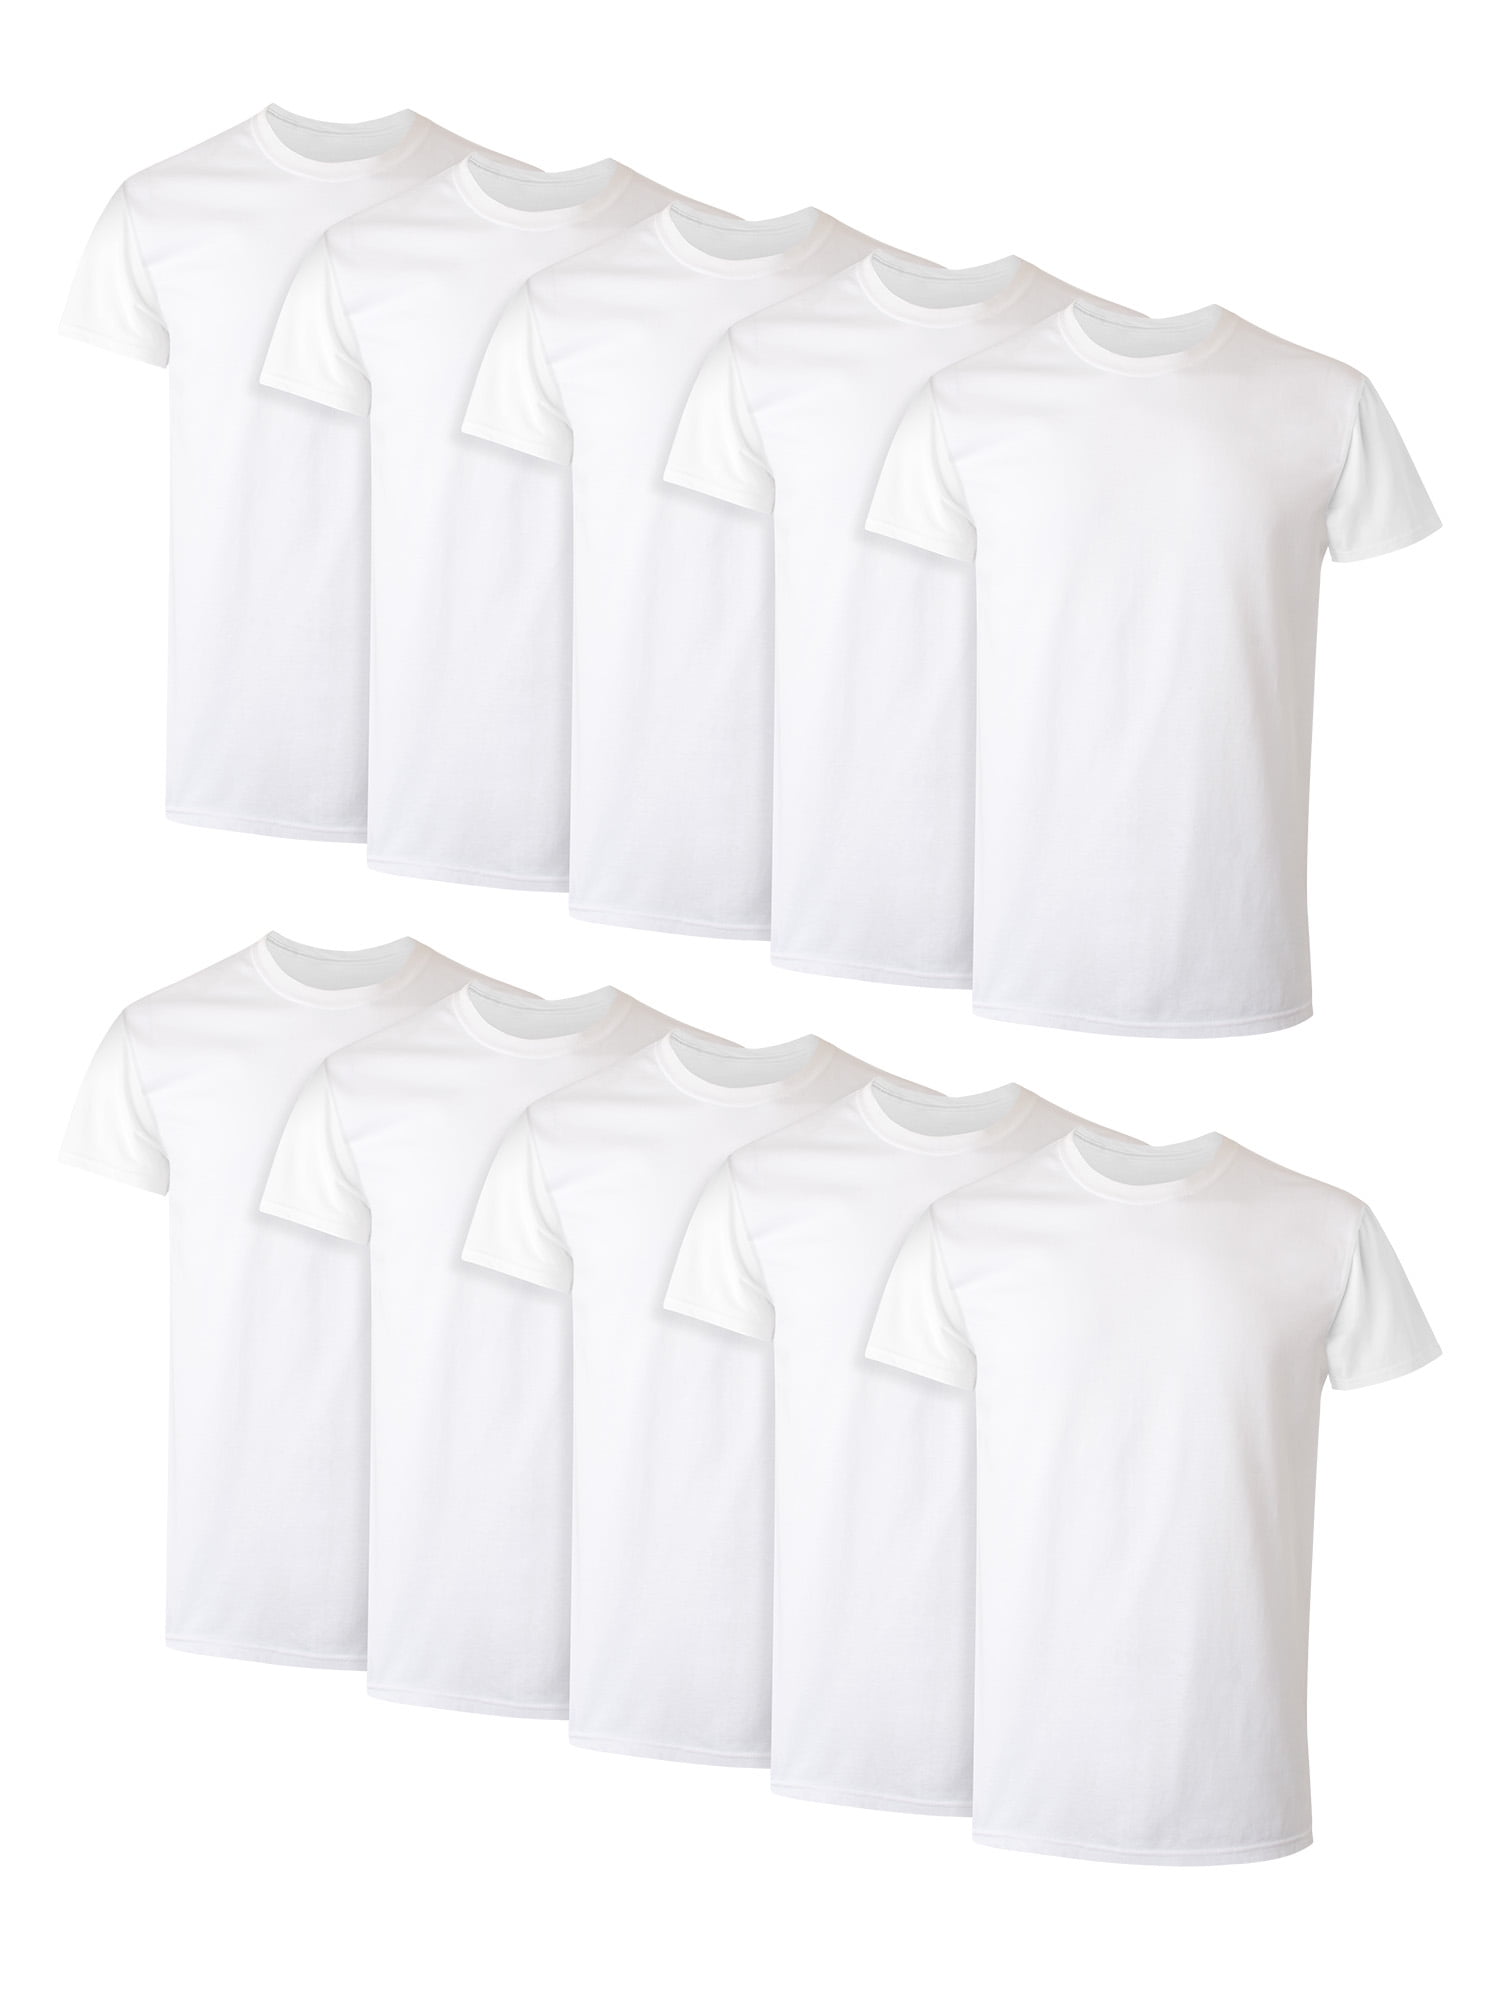 Hanes Tall SUPER VALUE Men's Comfortsoft Fresh IQ A-Shirt 5 pack